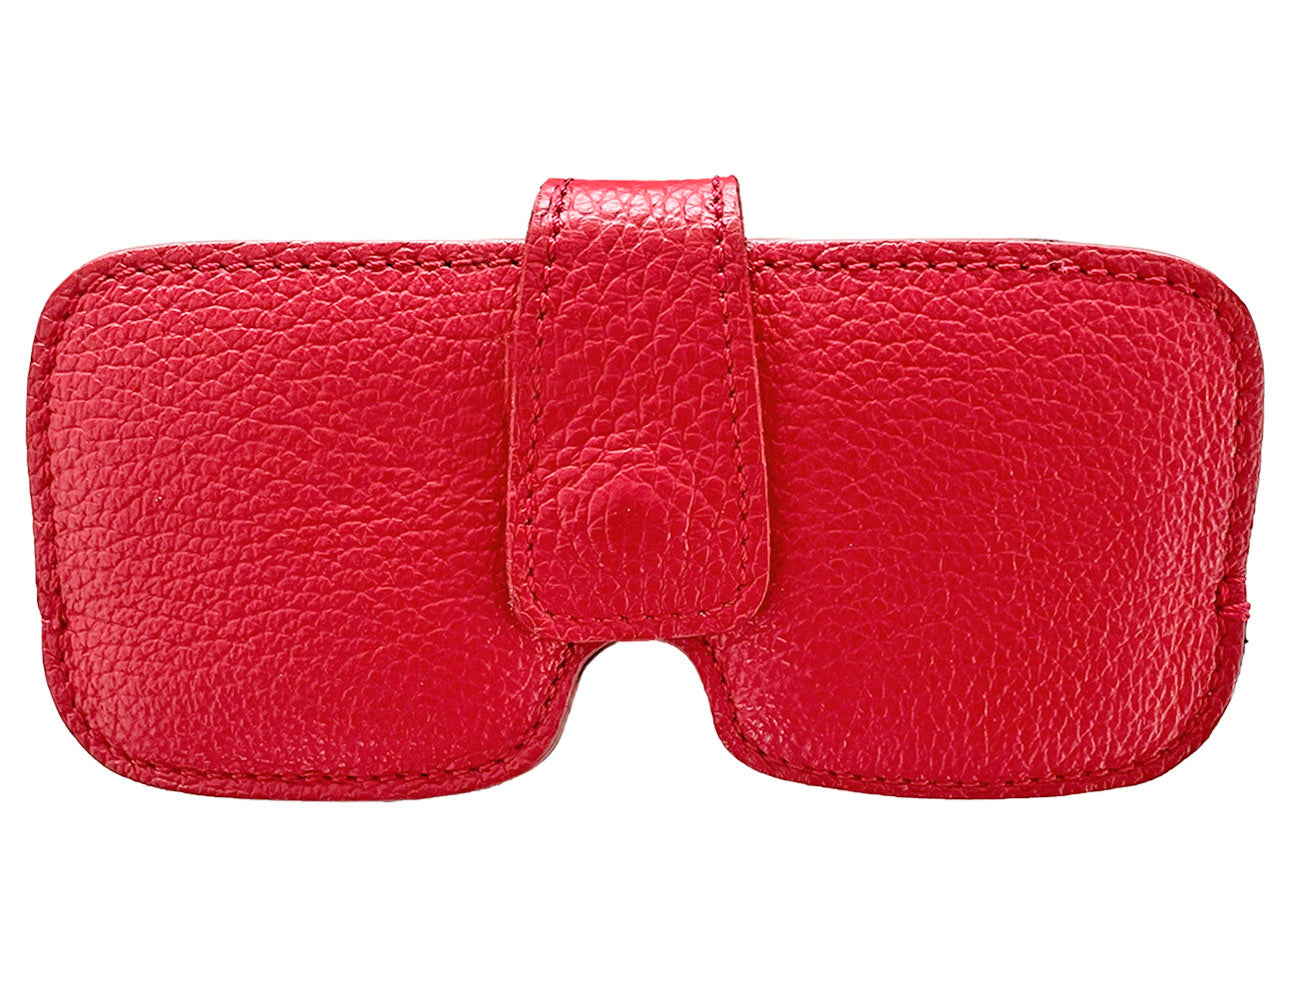 minibag glasses cover red, Brillenetui rot, Brillenschutz rot, minibag accessoires